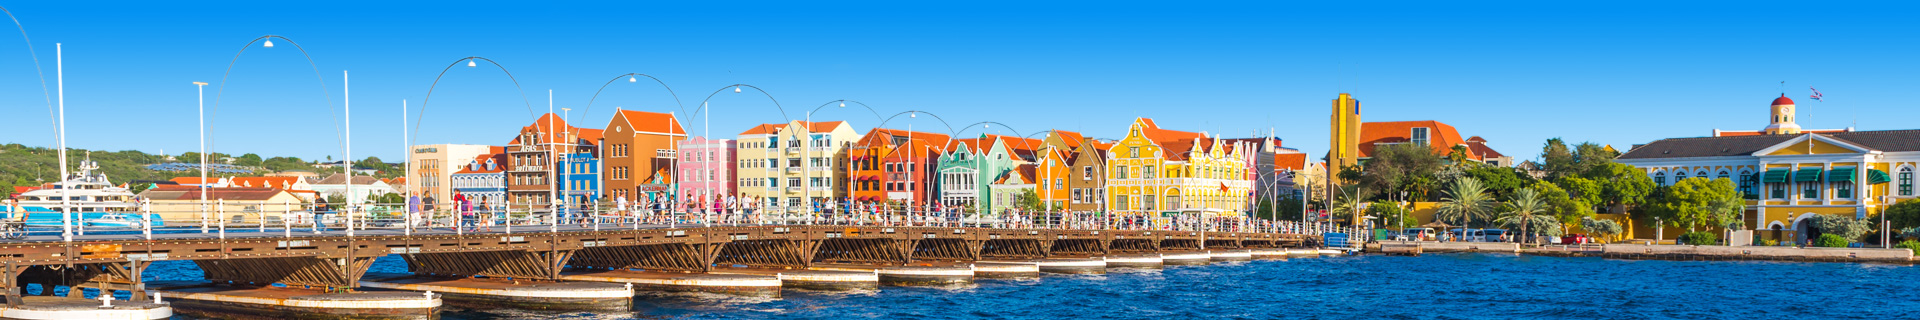 Gekleurde huisjes Curacao